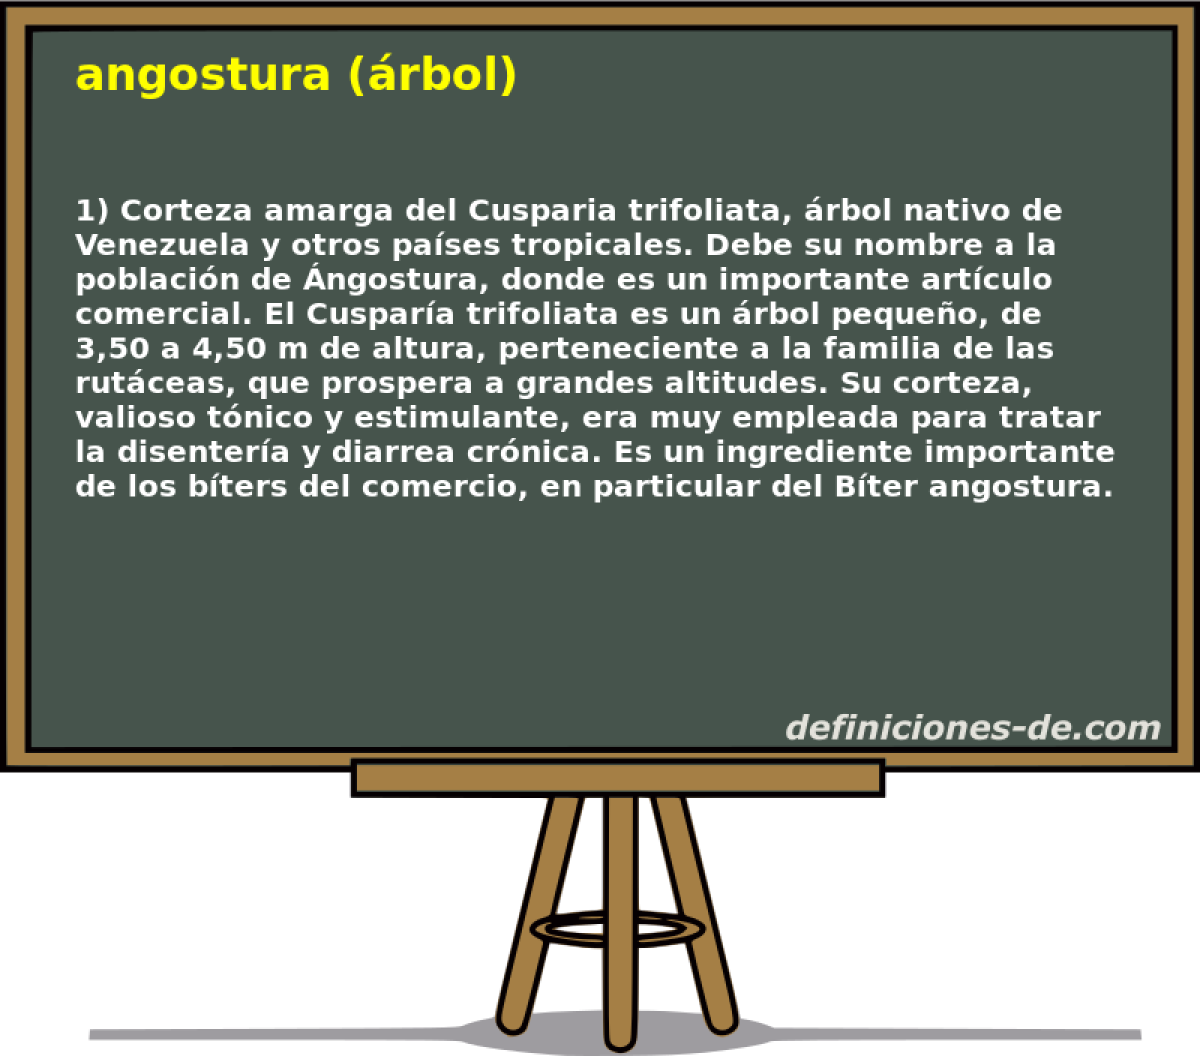 angostura (rbol) 